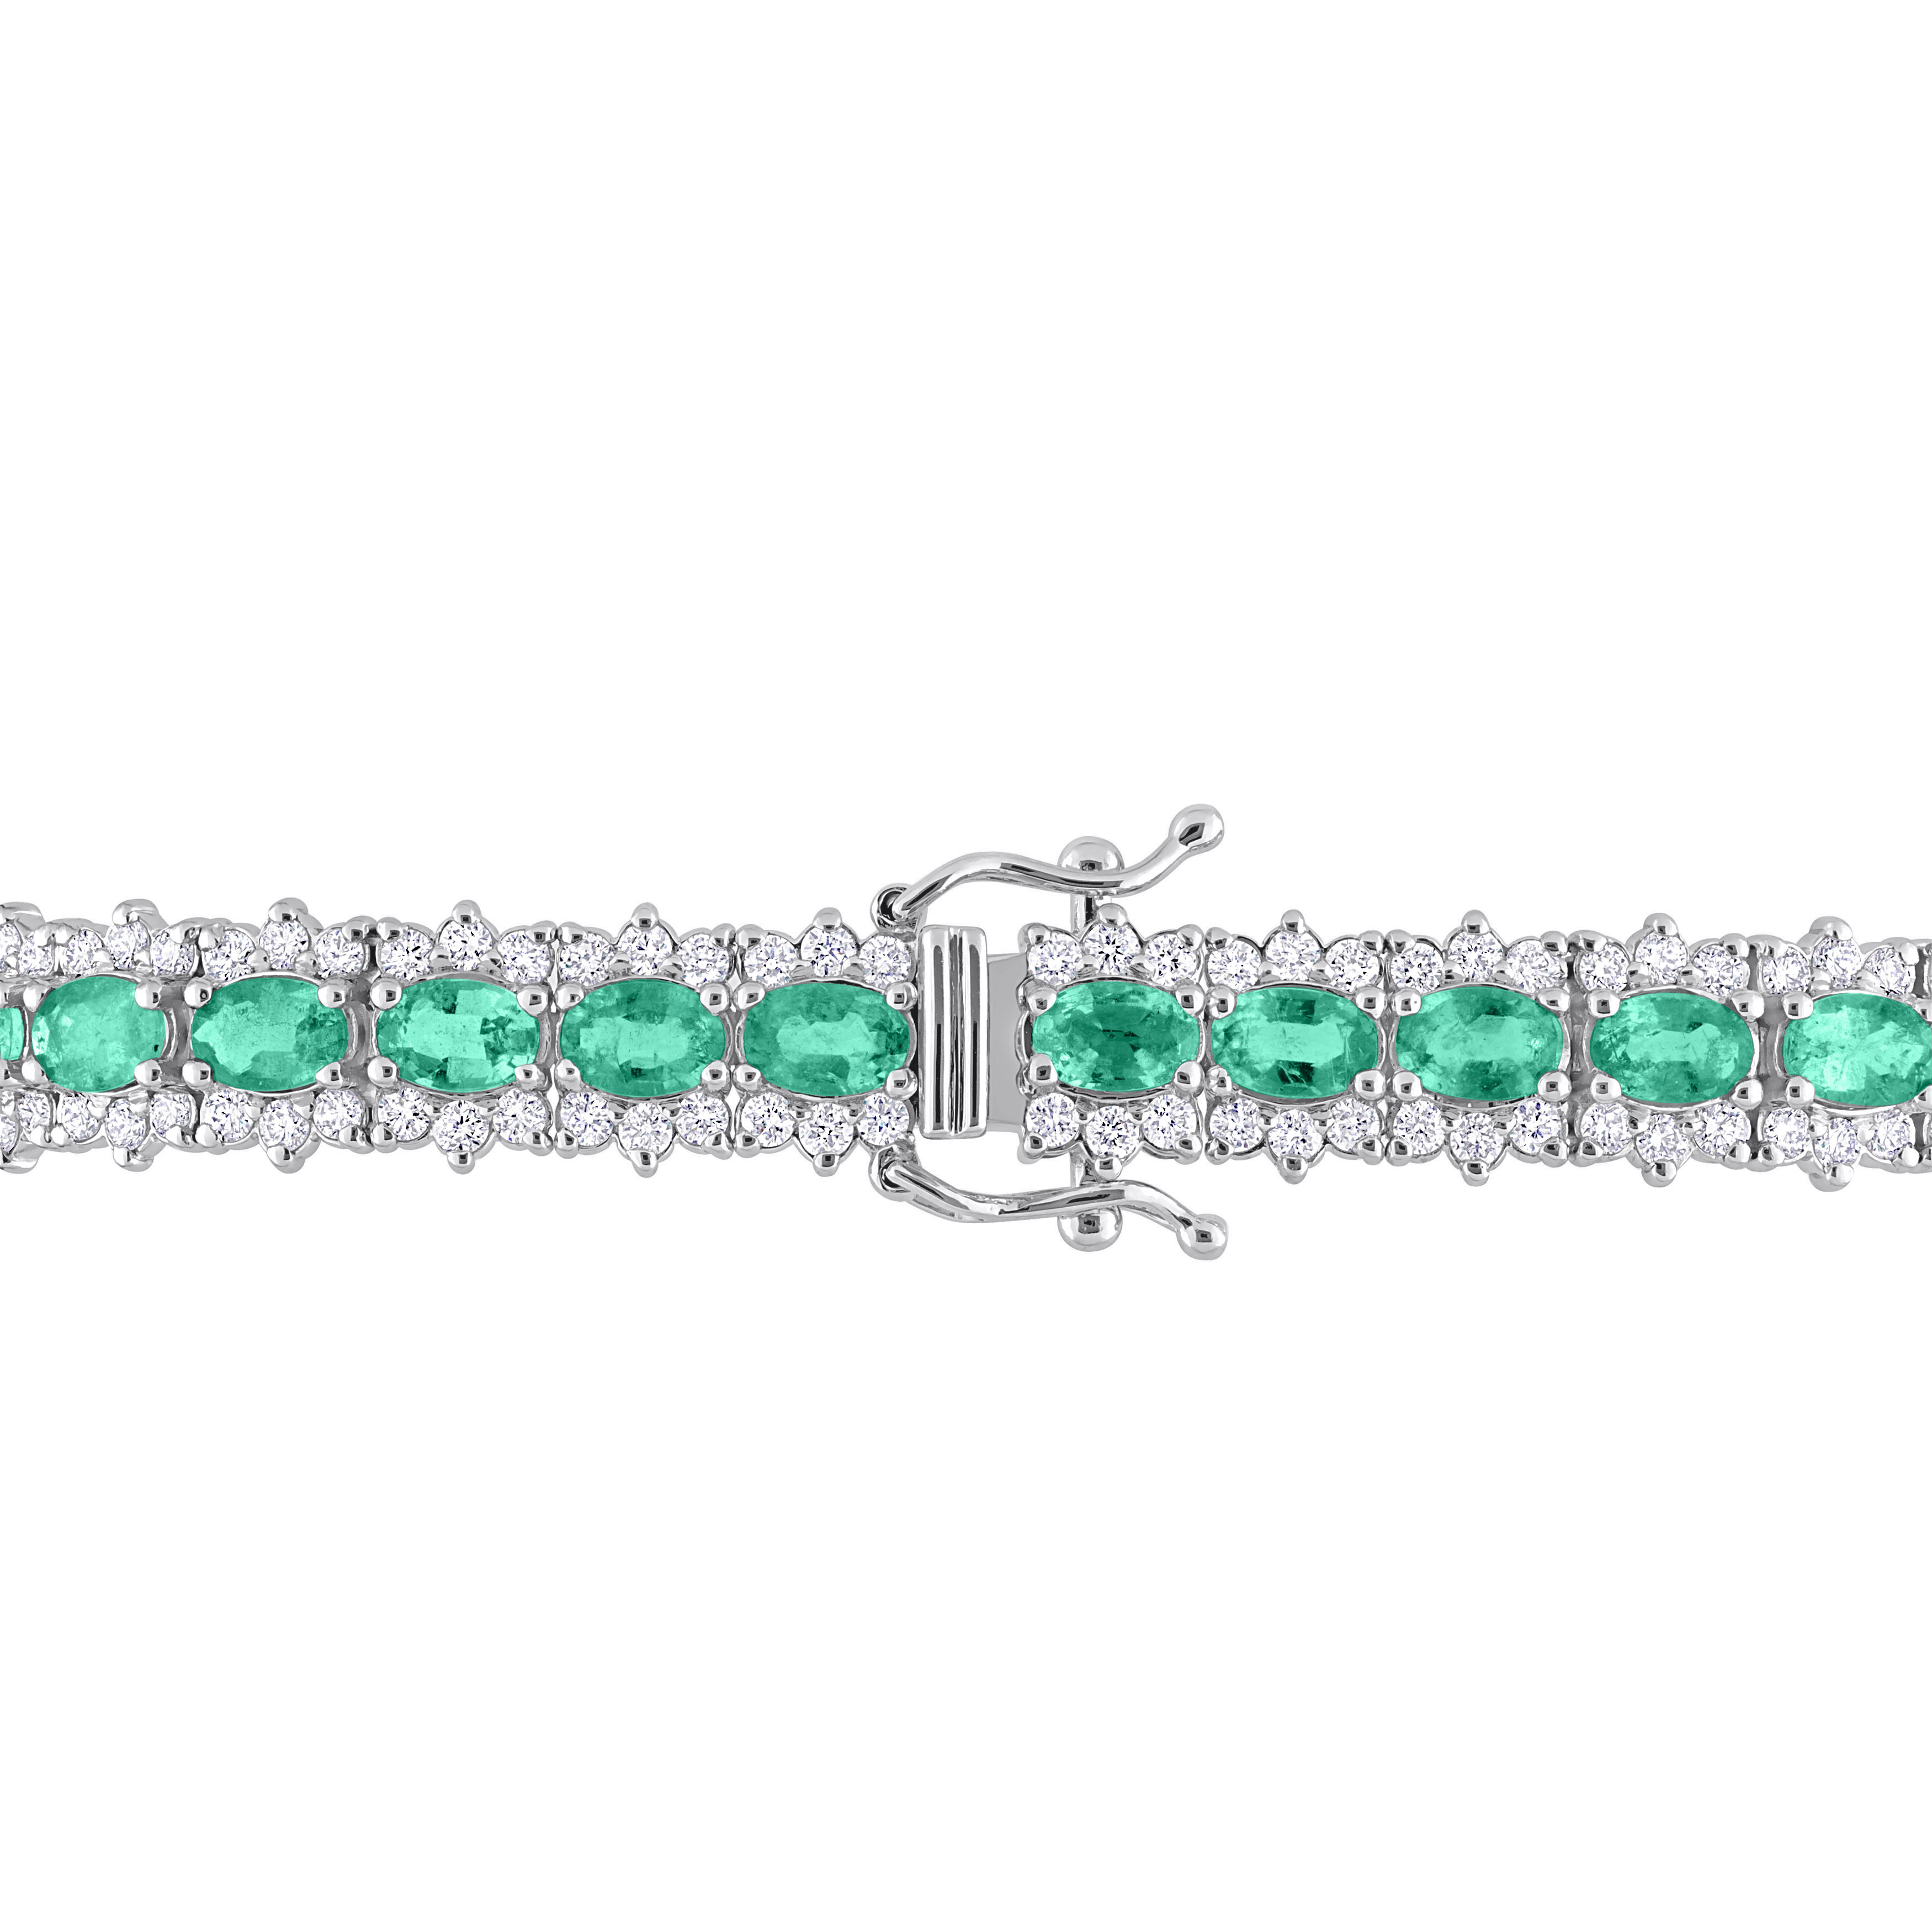 7 CT TGW Emerald and 2 1/2 CT TW Diamond Tennis Bracelet in 14k White Gold - 7.5 in.